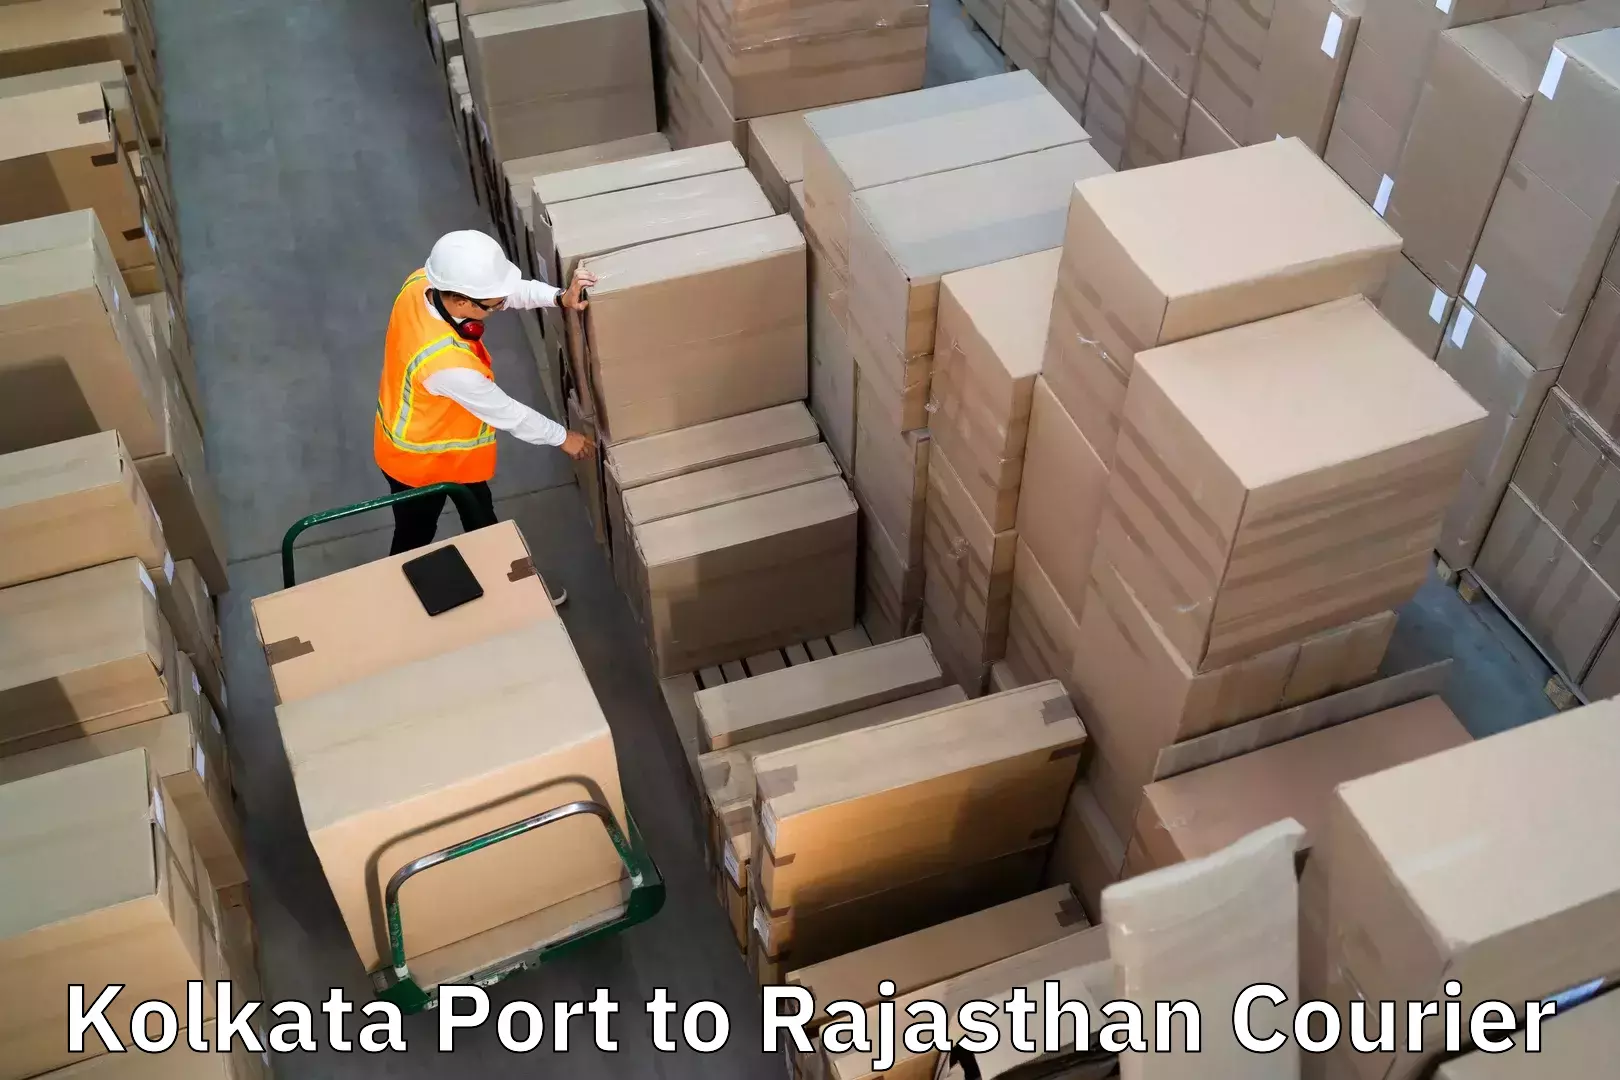 Luggage shipment tracking Kolkata Port to Achrol